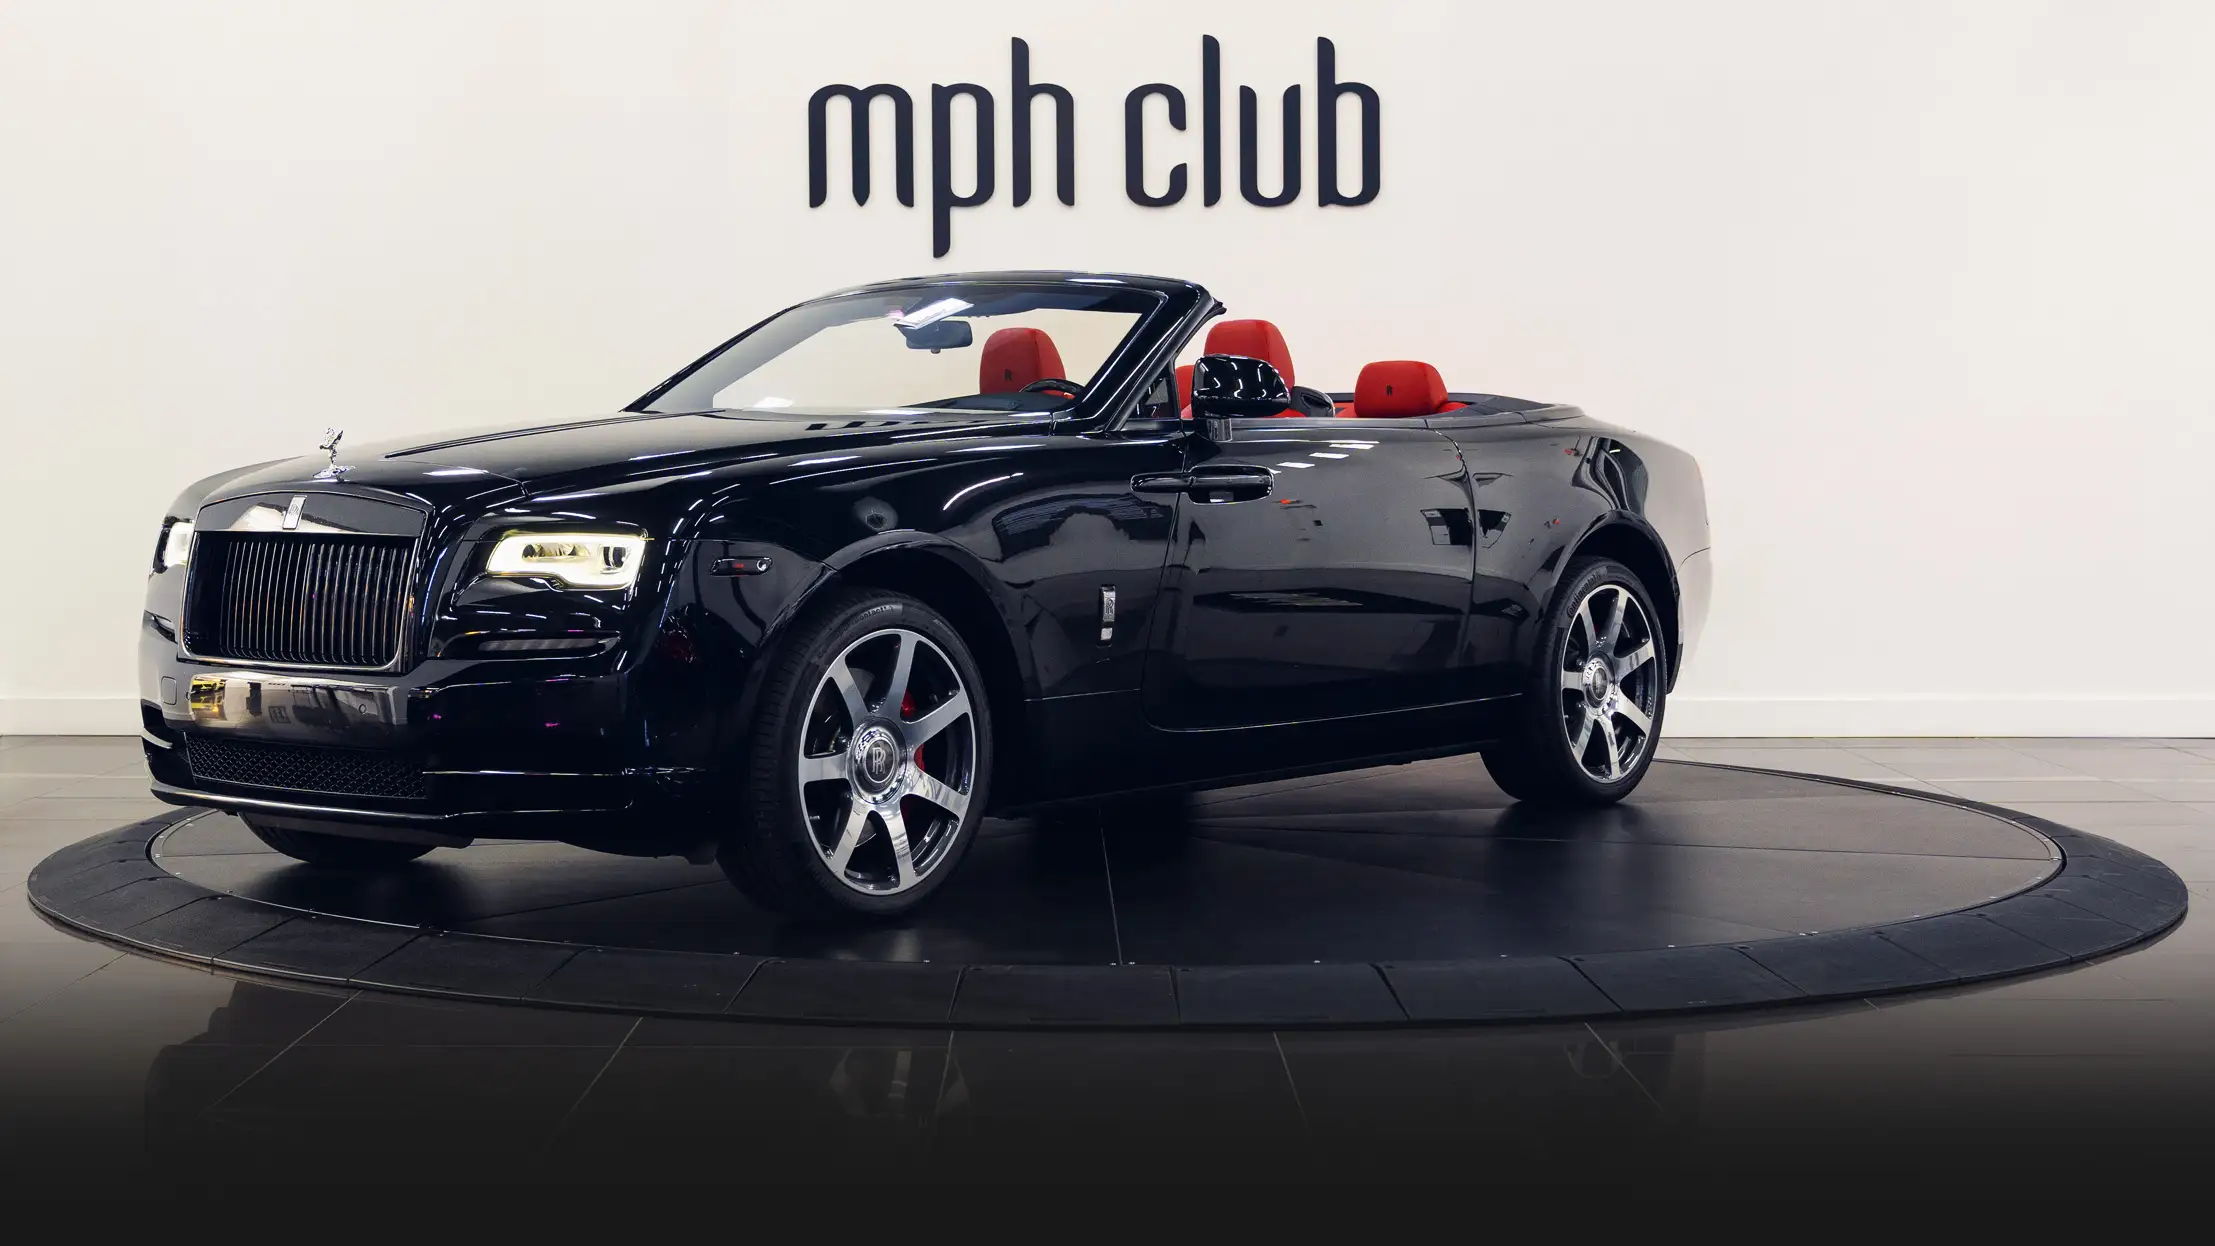 Black Rolls Royce Dawn rental profile view turntable mph club